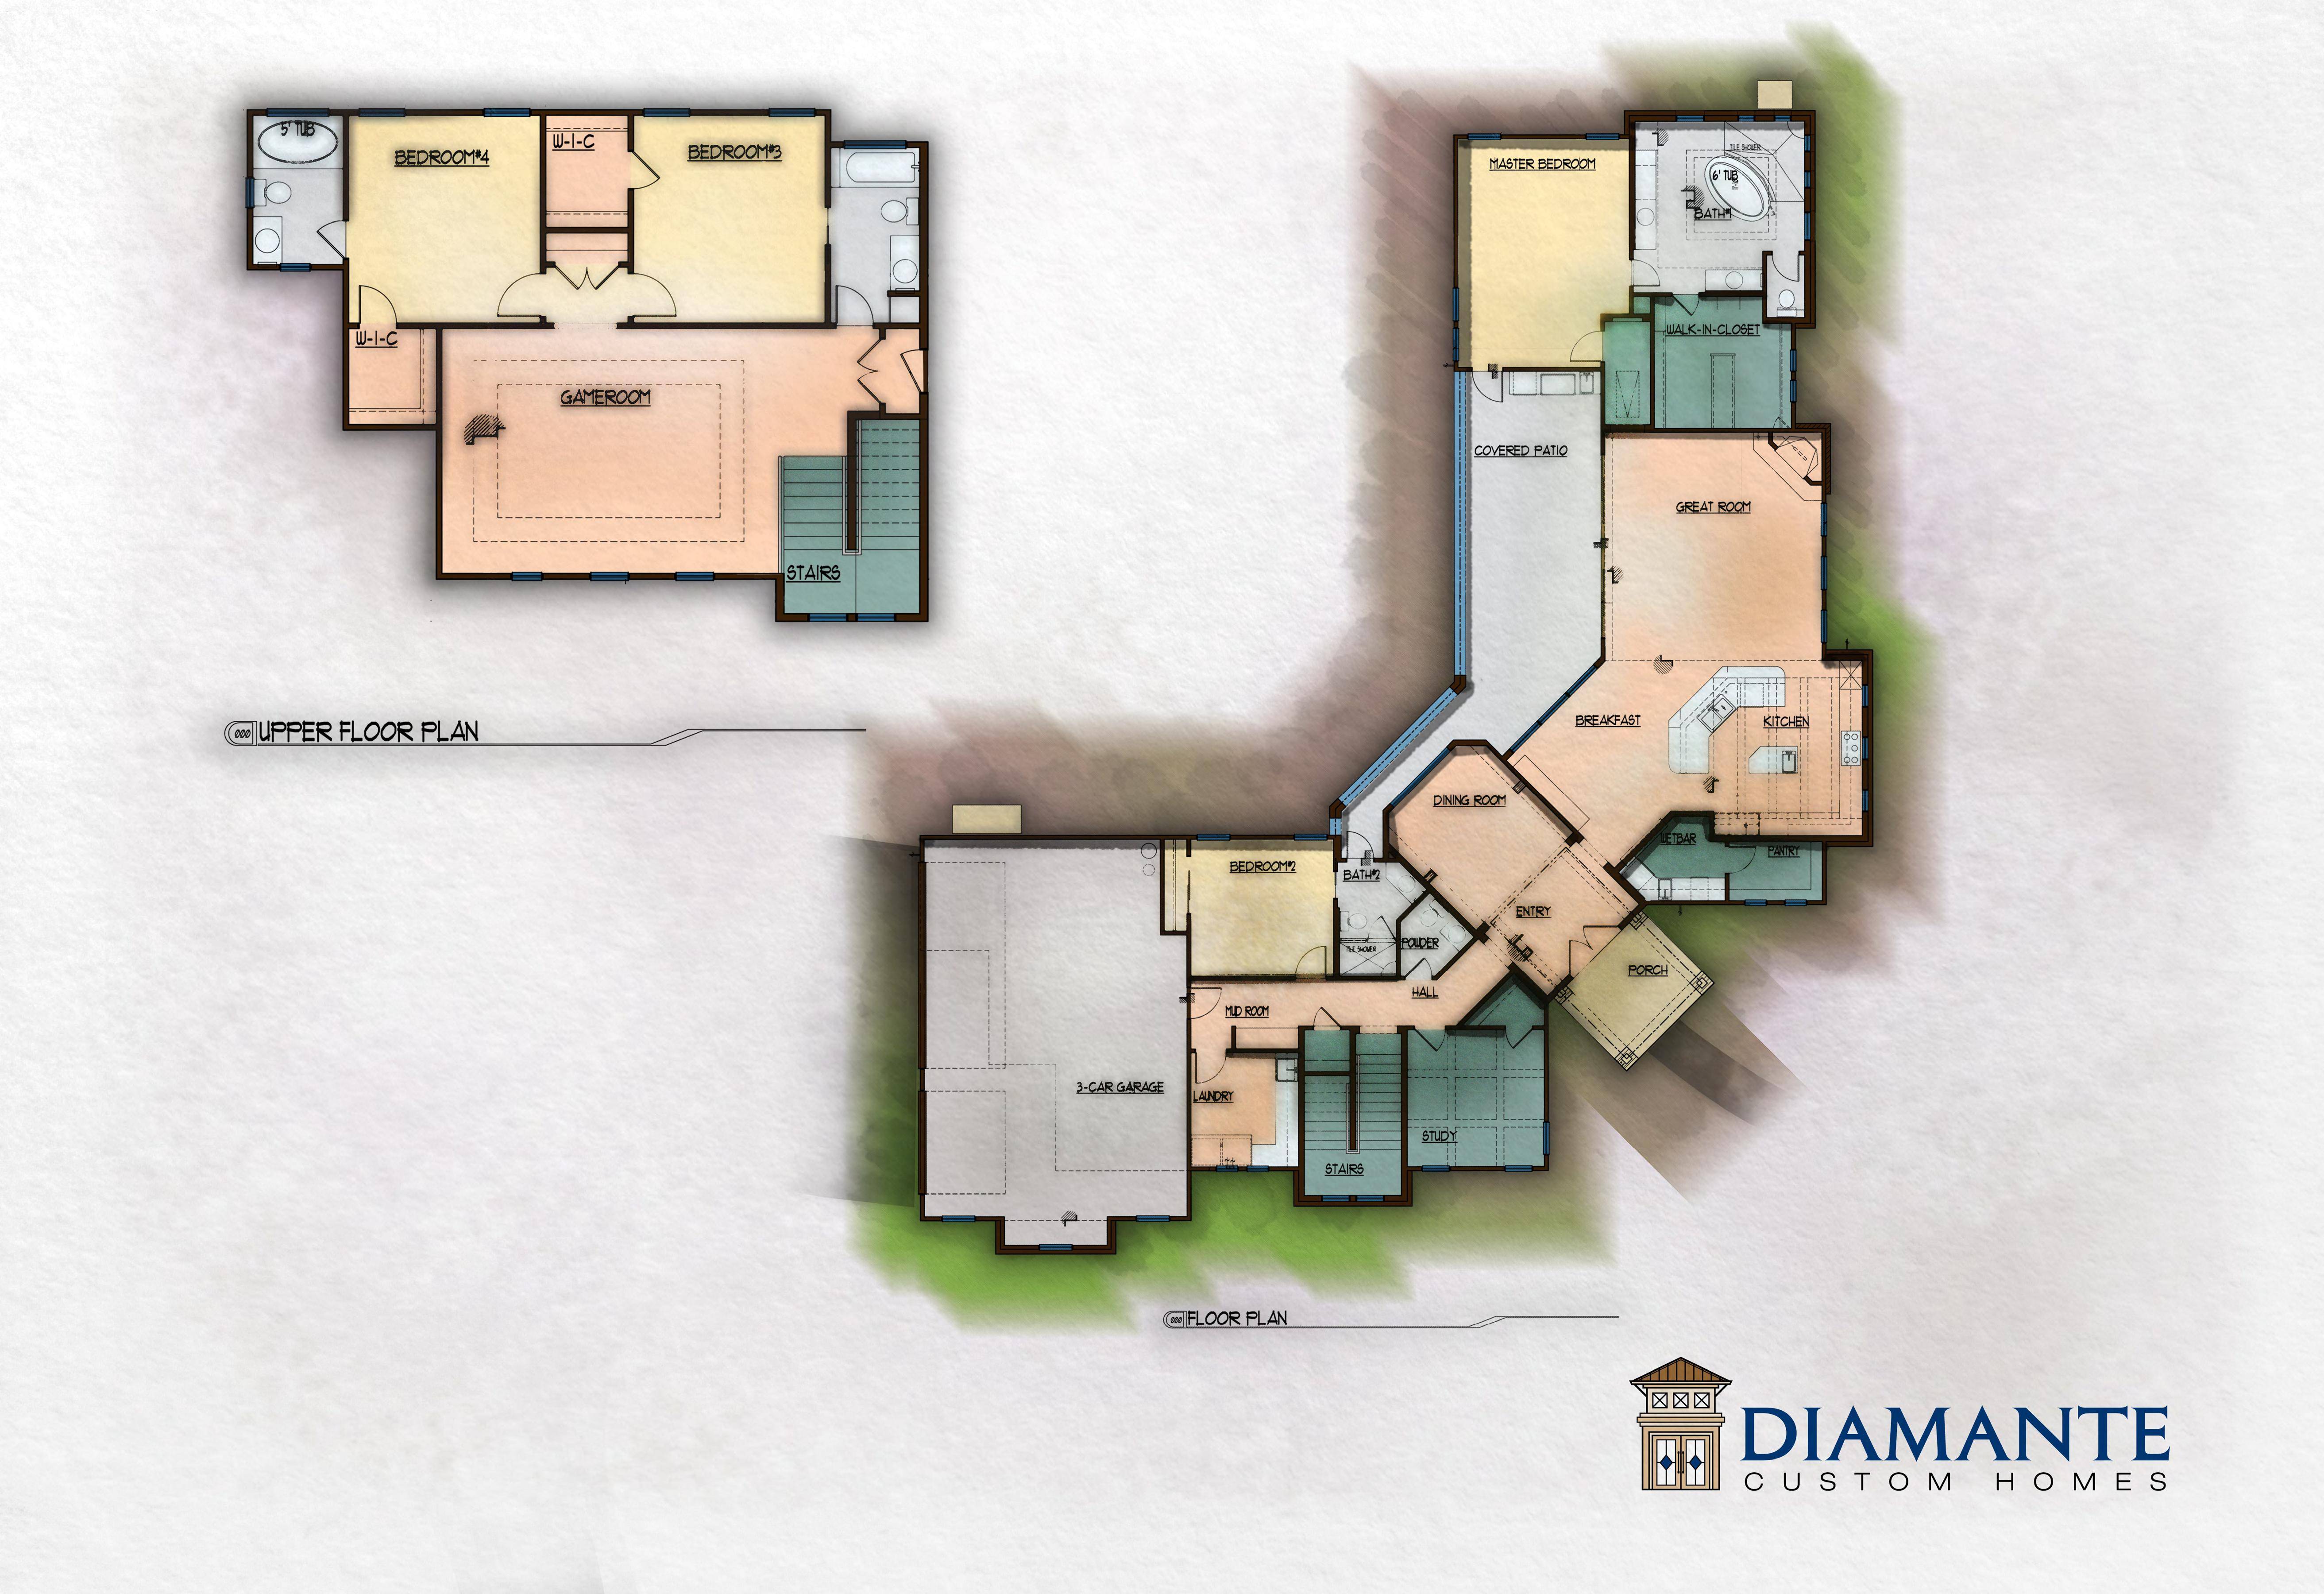 Floor Plan Diamante Custom Homes